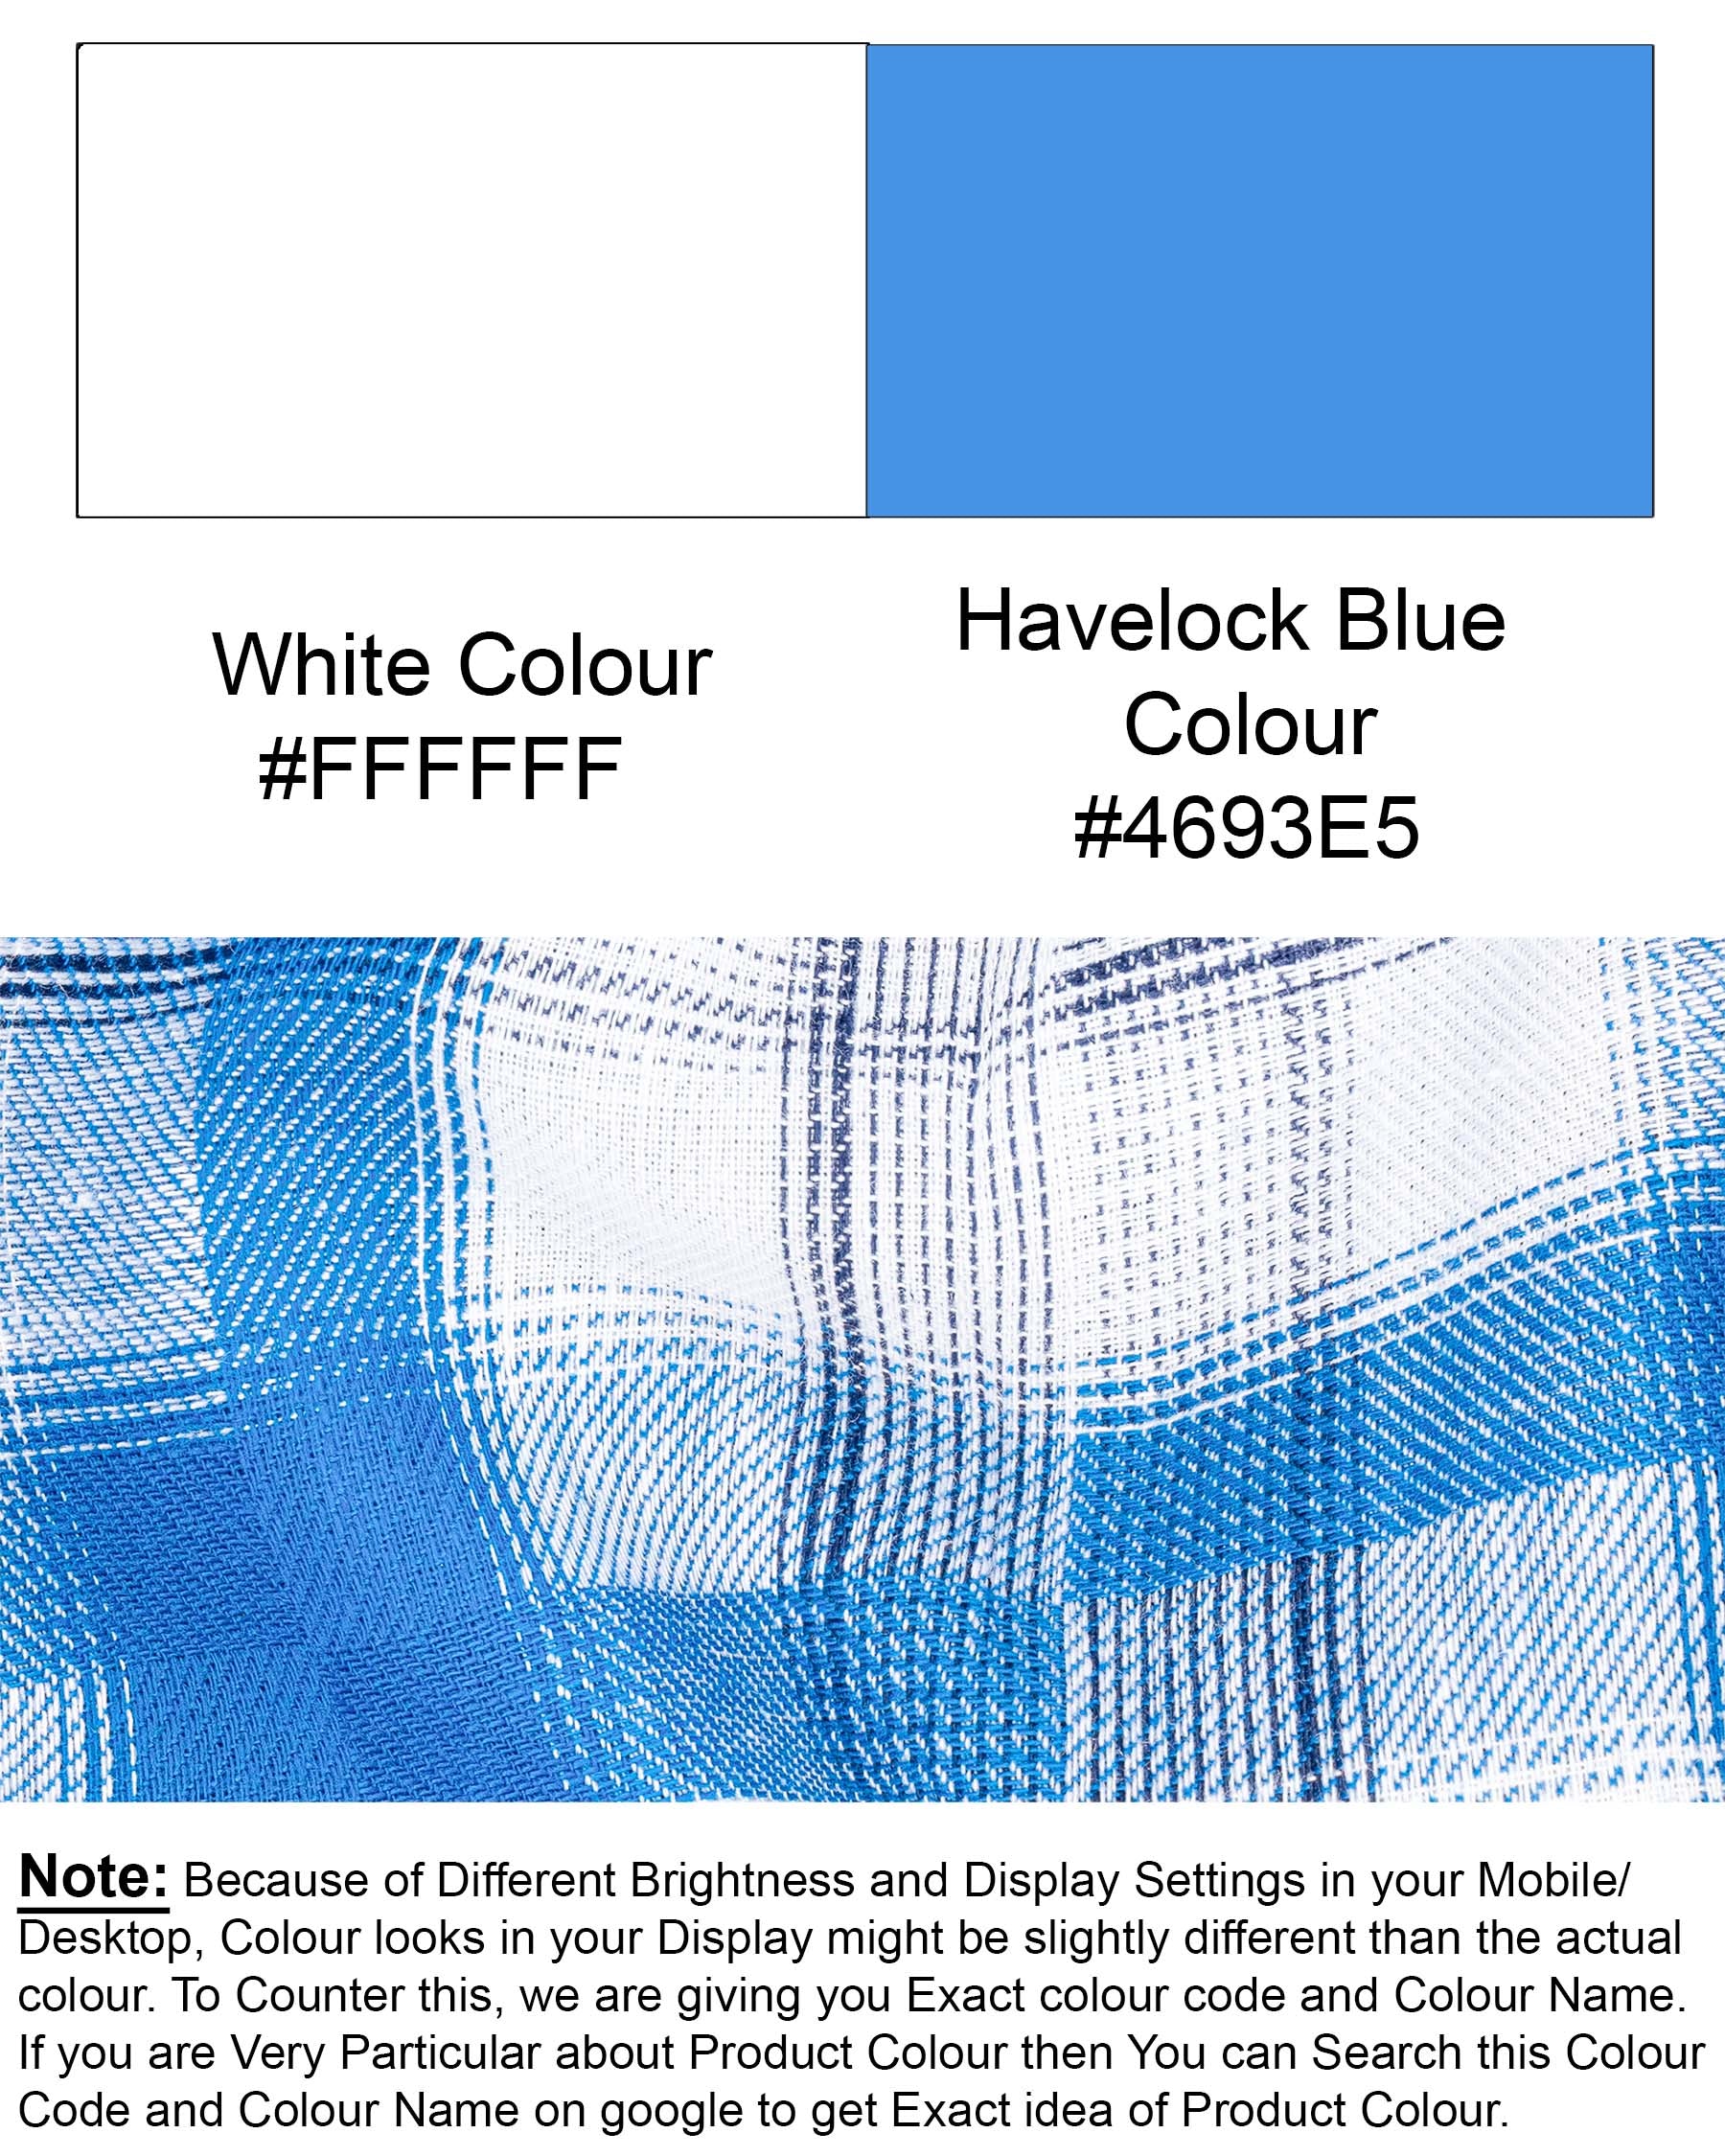 Bright White and Havelock Blue Plaid Twill Textured Premium Cotton Shirt 6679-BD-38,6679-BD-H-38,6679-BD-39,6679-BD-H-39,6679-BD-40,6679-BD-H-40,6679-BD-42,6679-BD-H-42,6679-BD-44,6679-BD-H-44,6679-BD-46,6679-BD-H-46,6679-BD-48,6679-BD-H-48,6679-BD-50,6679-BD-H-50,6679-BD-52,6679-BD-H-52